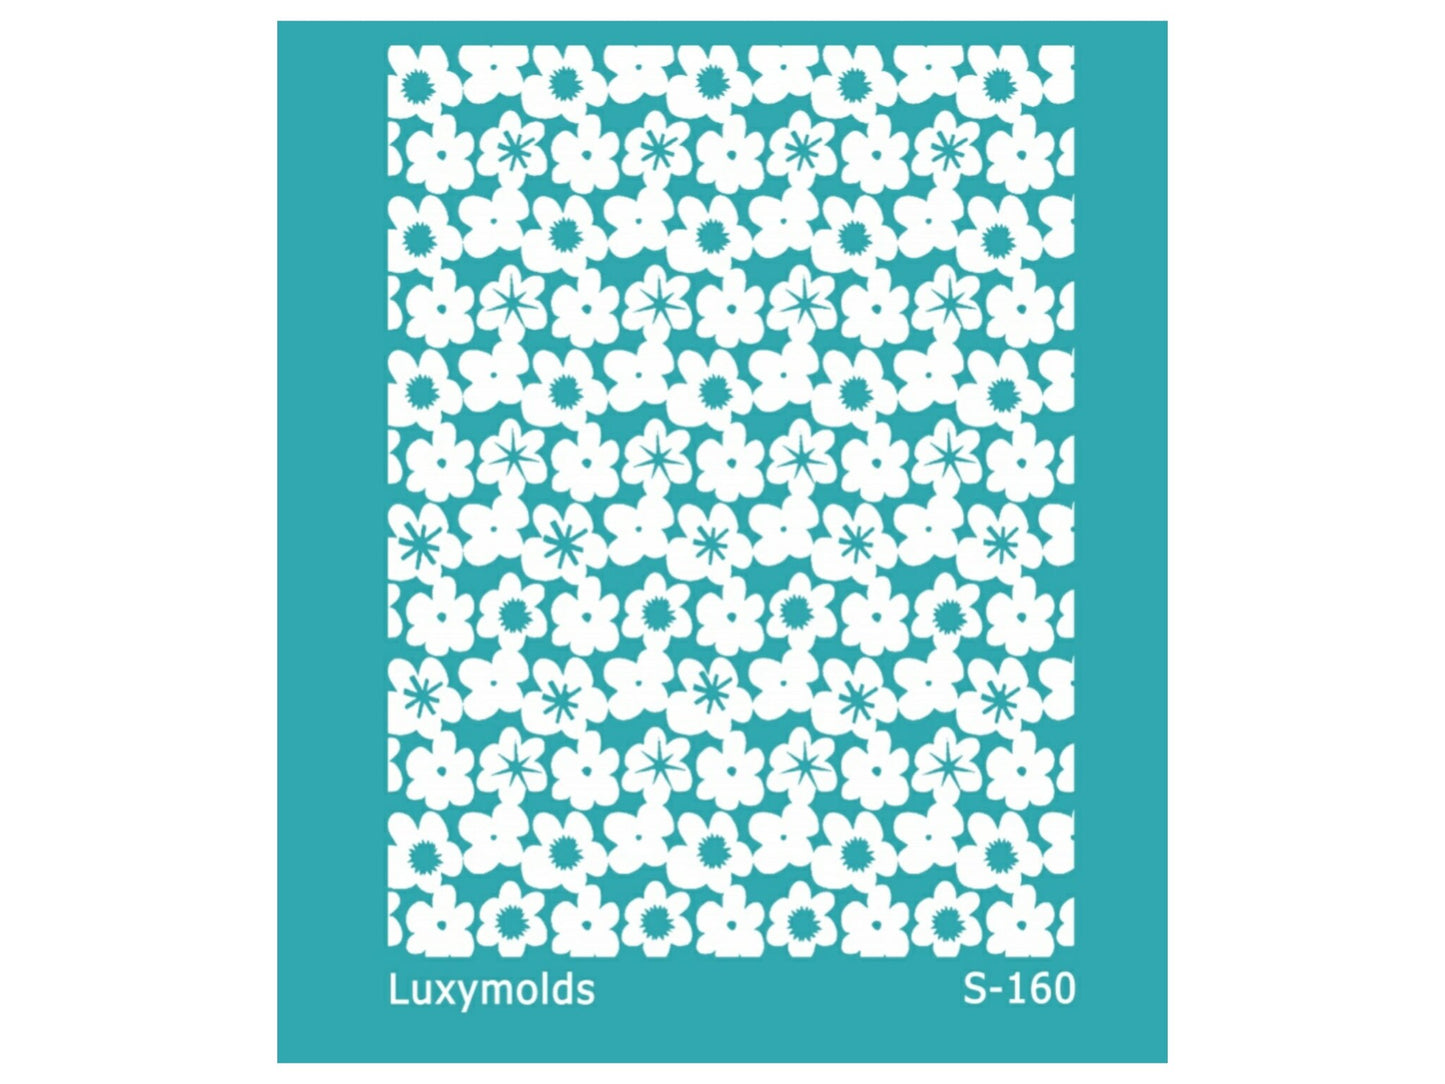 Silk screen stencil for polymer clay "Luxymolds" S-160